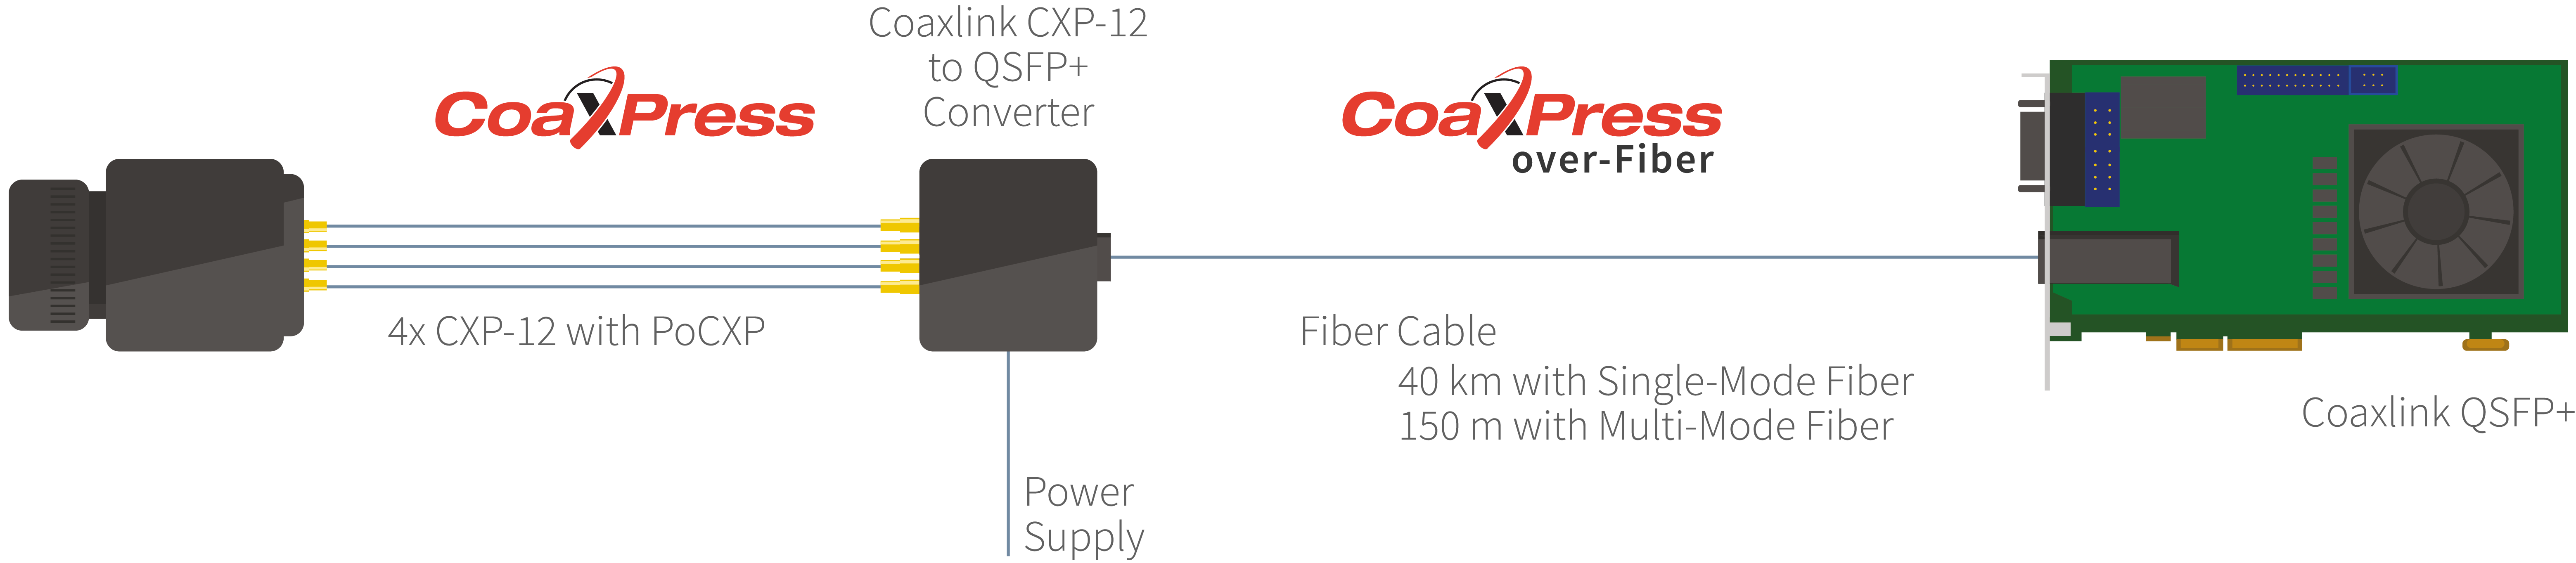 Coaxlink QSFP+ 프레임 그래버에 CXP-12 카메라 연결